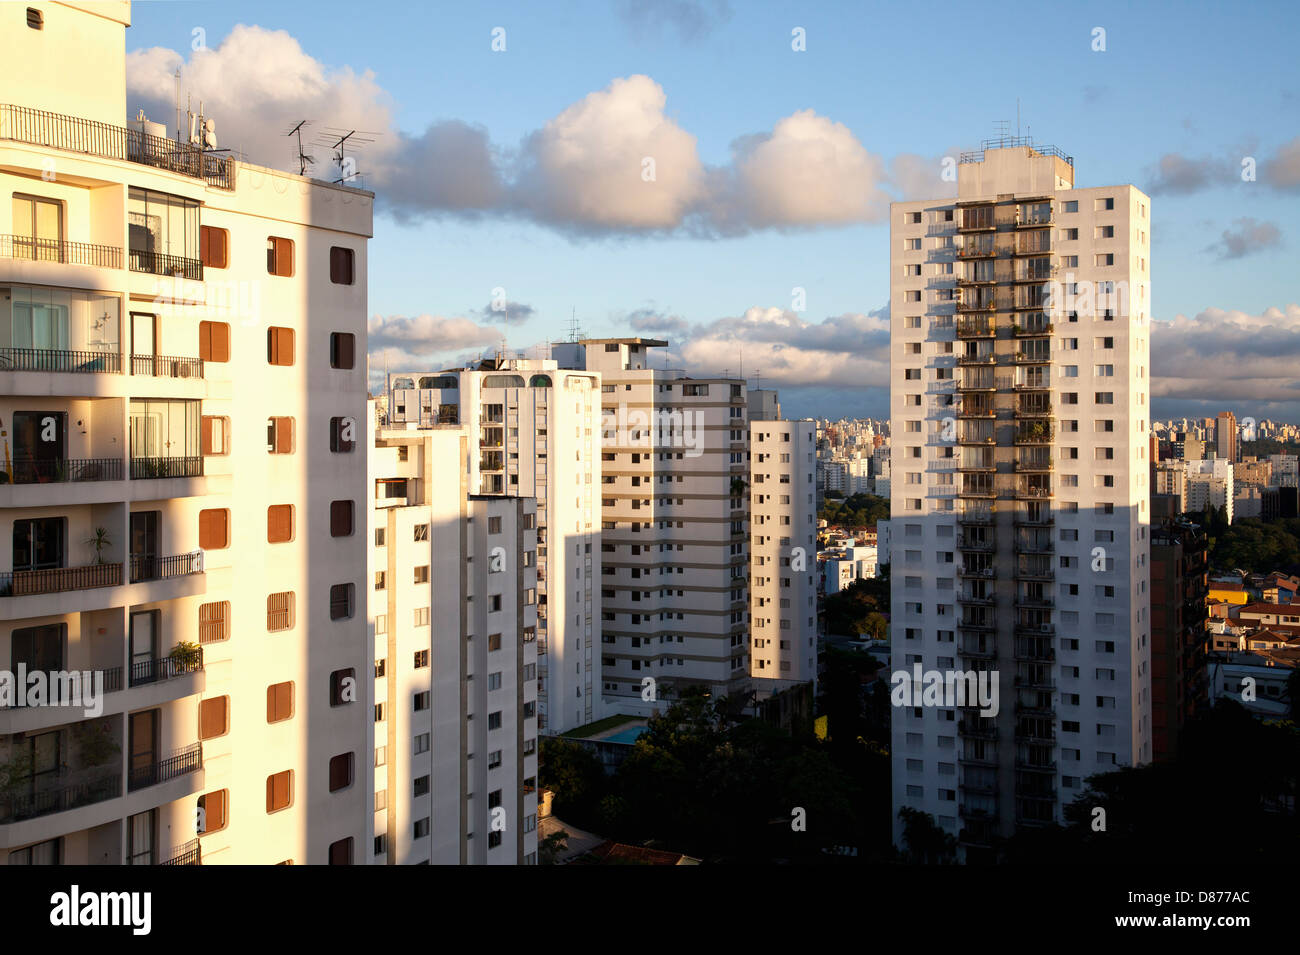 Brazil, Sao Paulo, View of apartment buildings Stock Photo